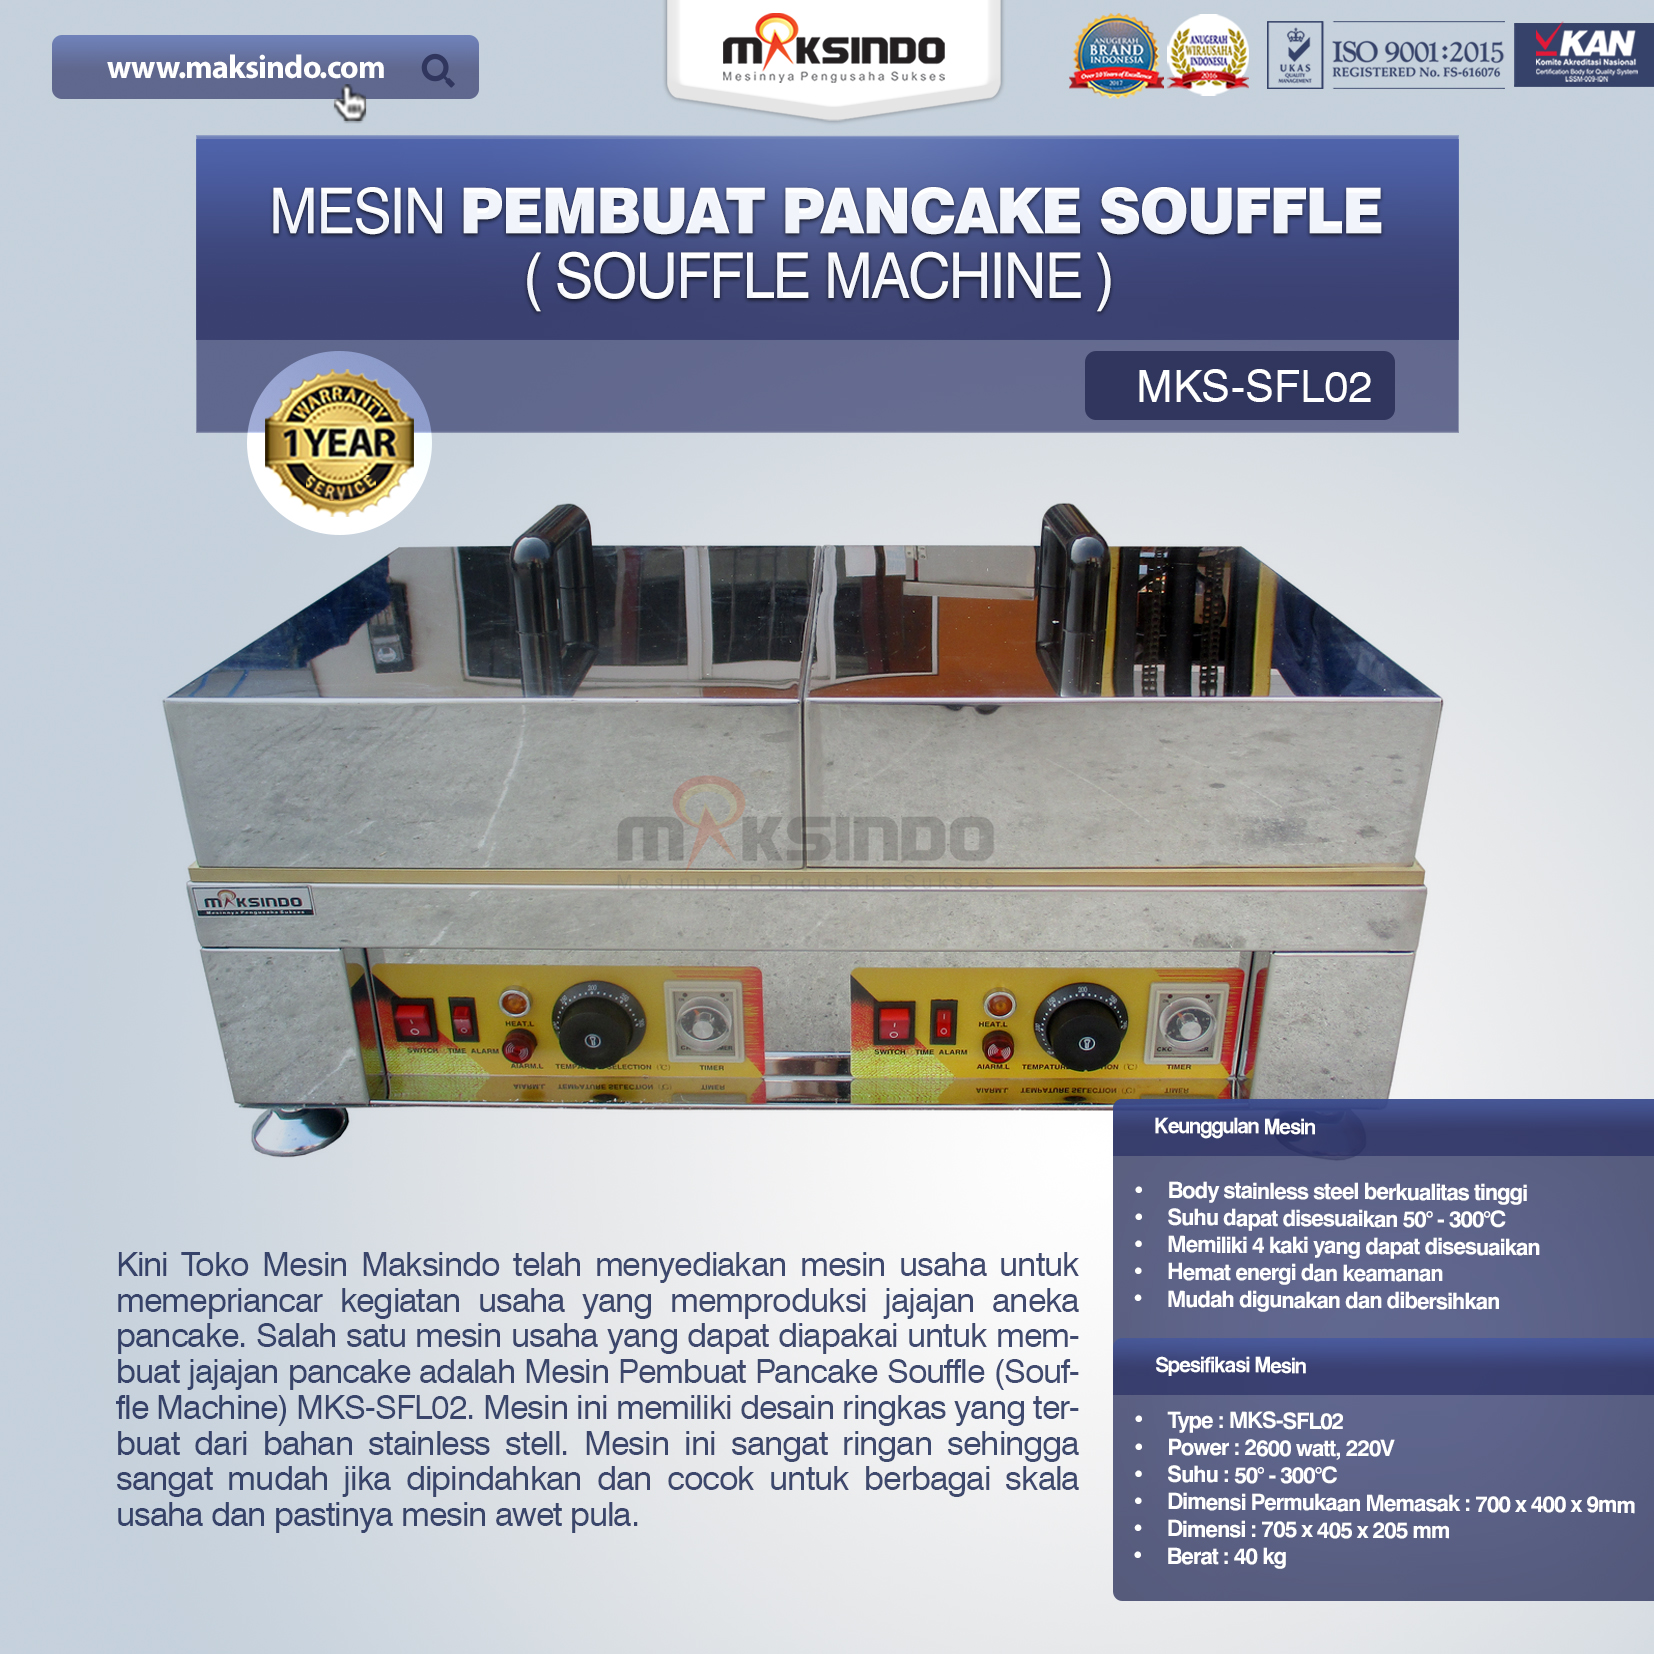 Mesin Pembuat Pancake Souffle (Souffle Machine) MKS-SFL02